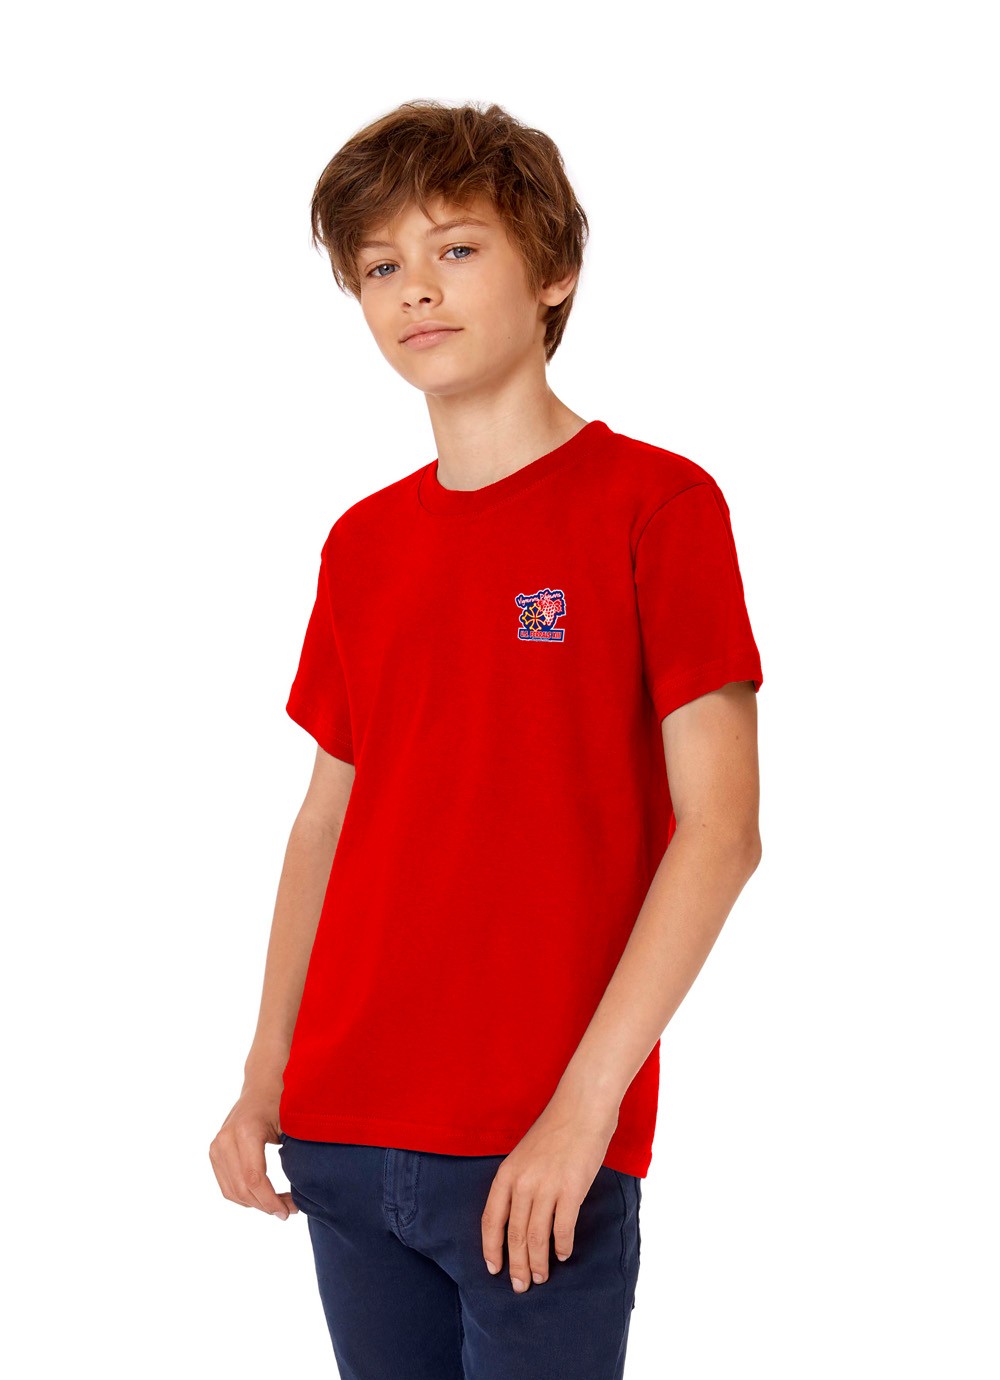 Tshirt enfant US Ferrals XIII rouge